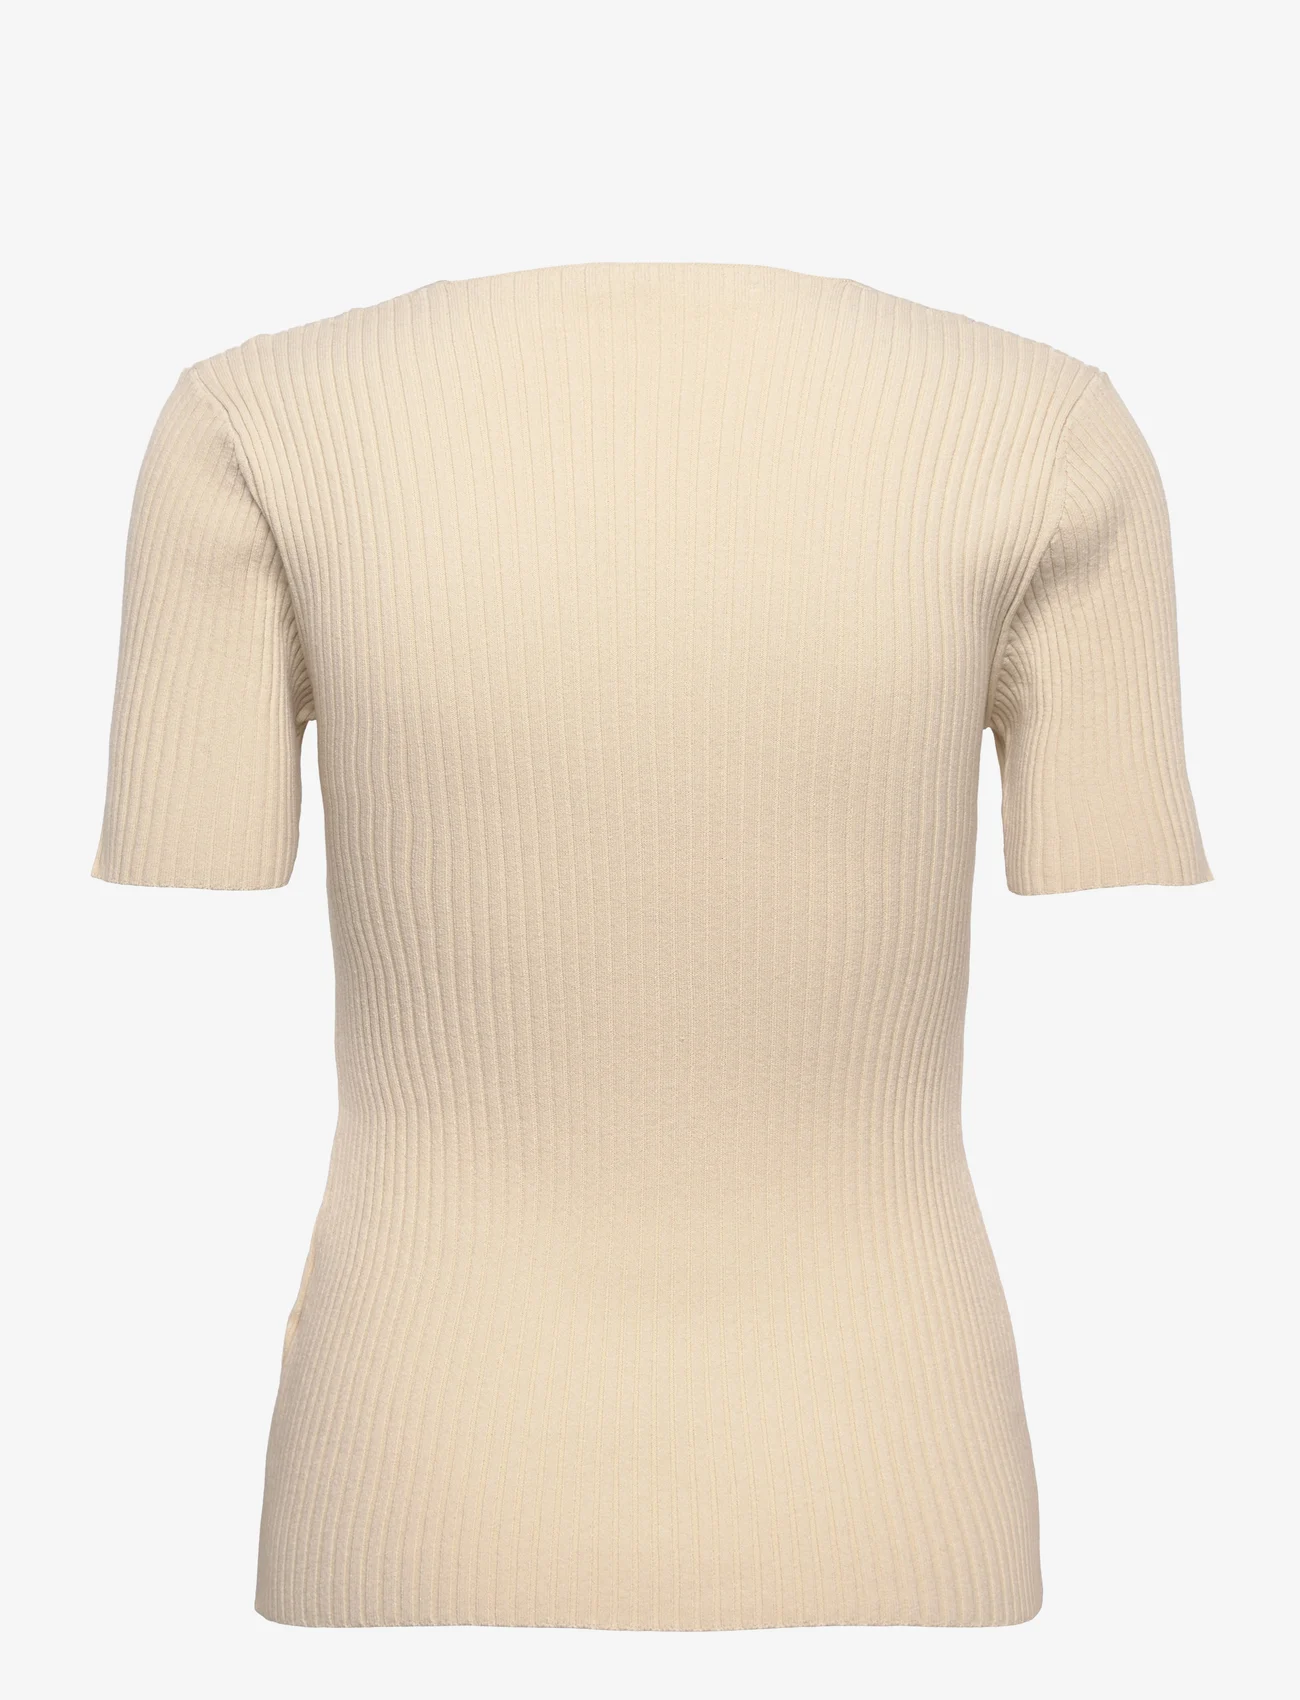 Rabens Saloner - Fabia - Contour knit short slv. top - t-shirt & tops - chalk - 1